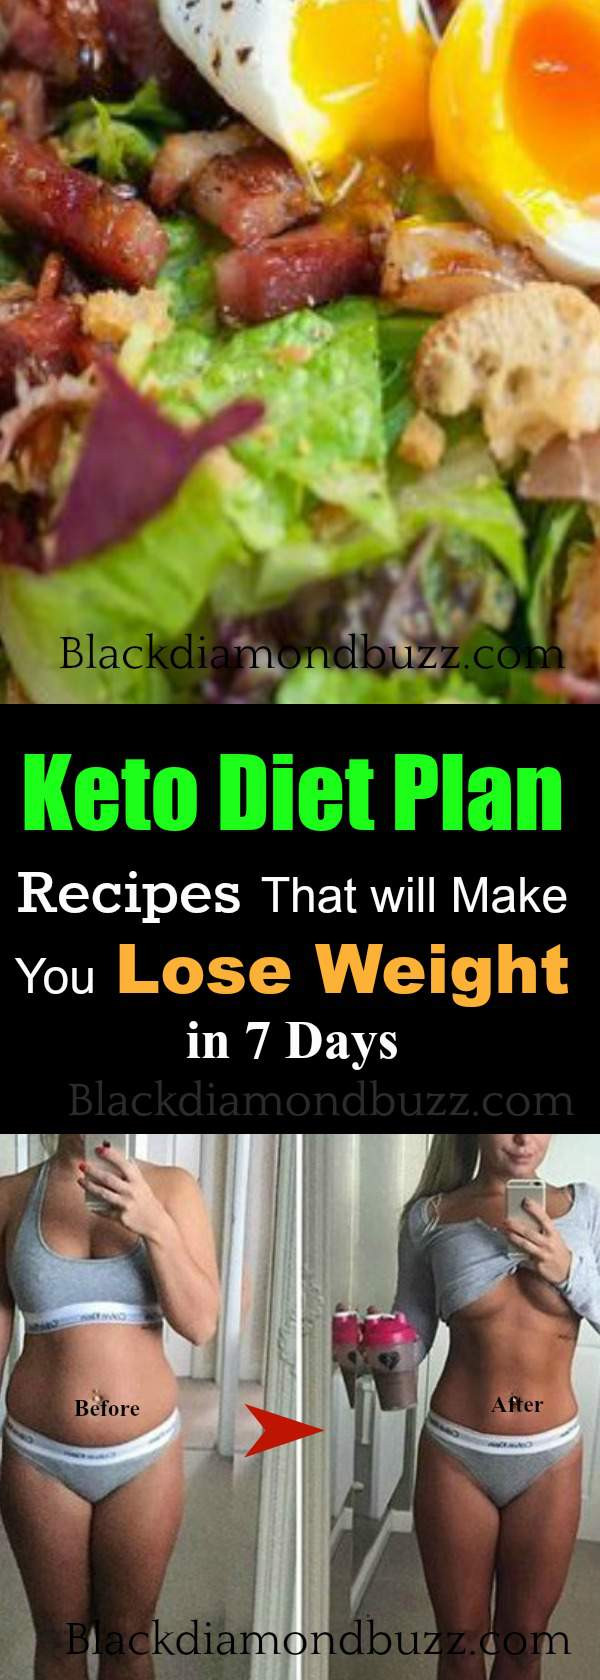 Diy Keto Diet Plan
 Keto Diet Plan Recipes That Will Make You Lose Weight in 7